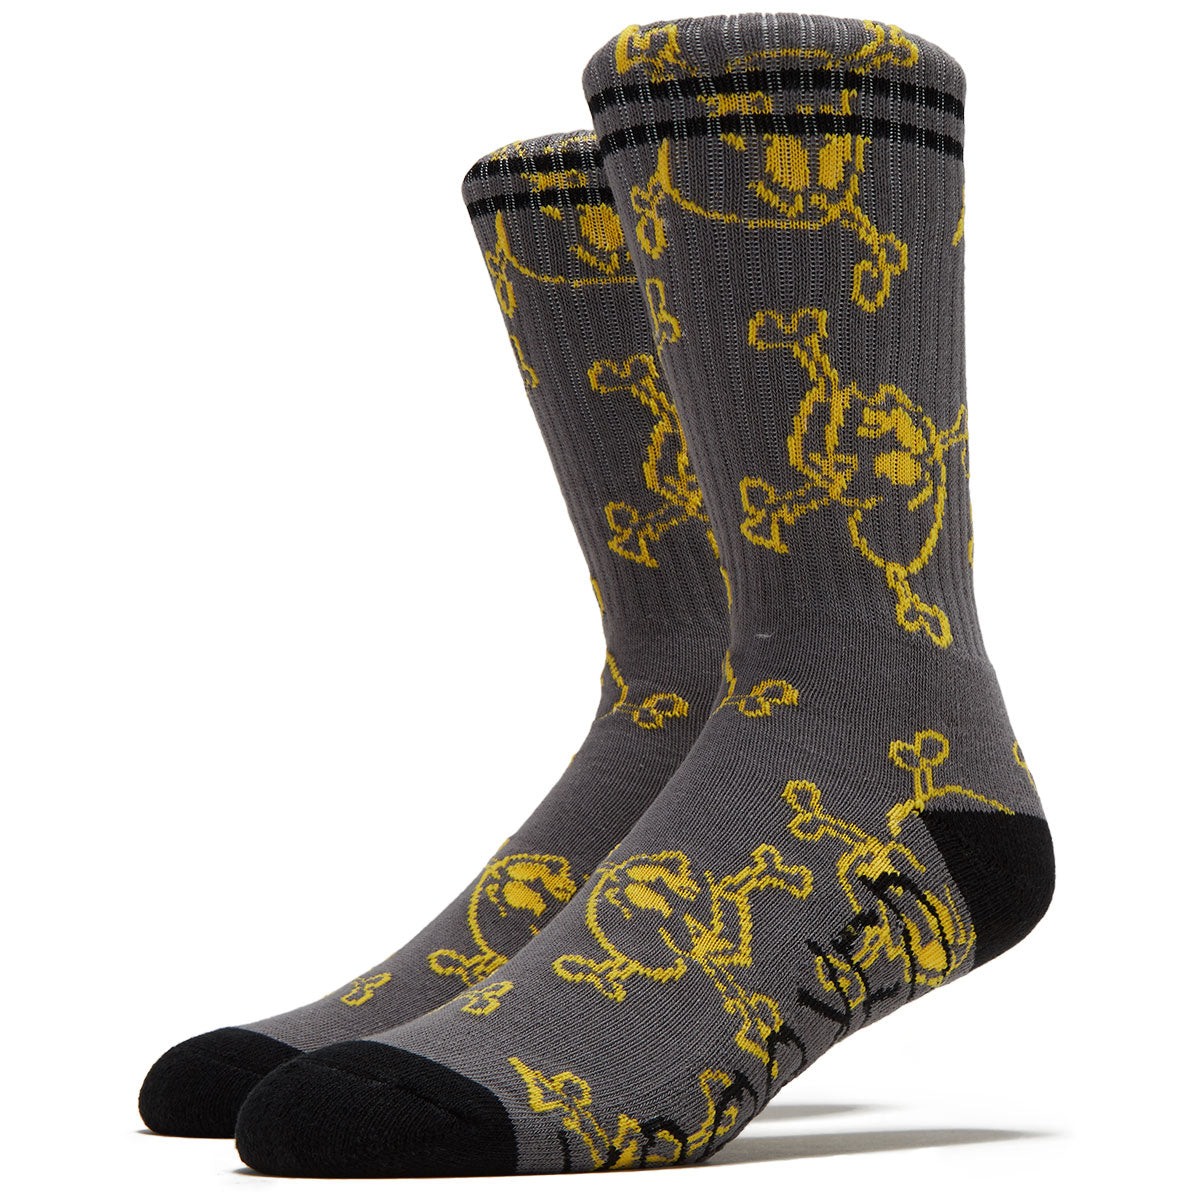 Krooked Style Socks - Charcoal/Yellow/Black image 1